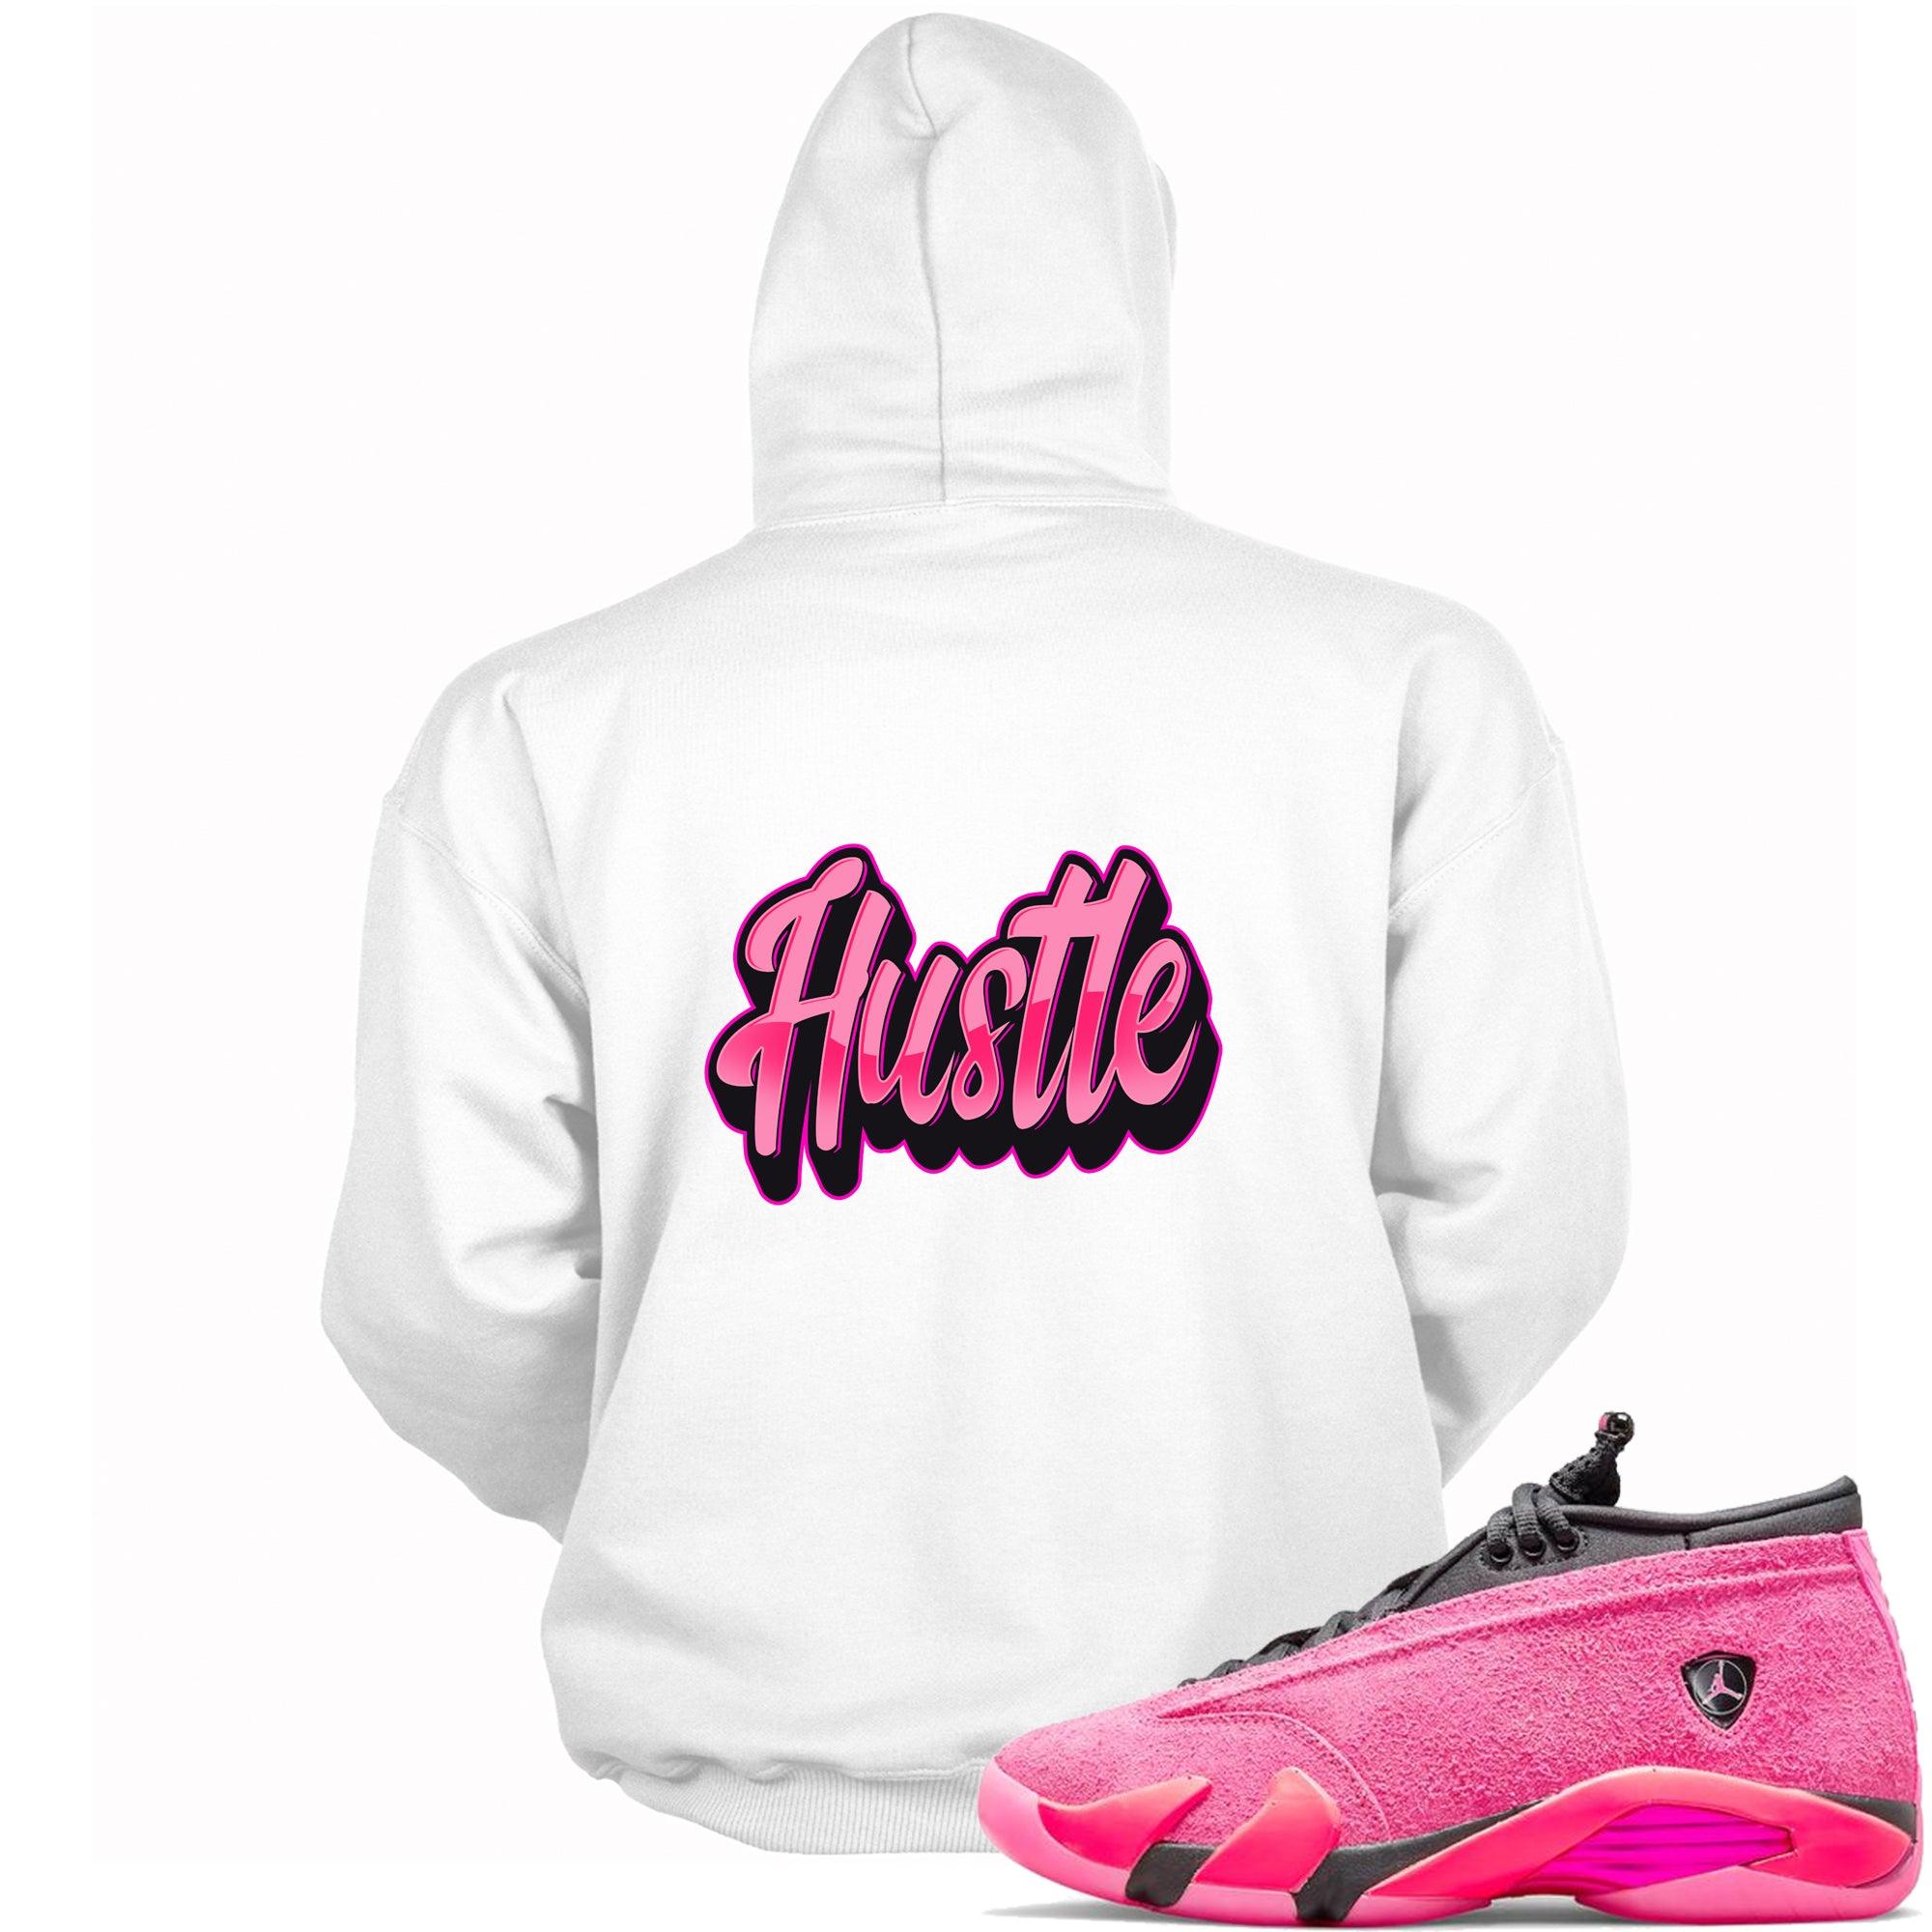 Hustle Hoodie AJ 14s Low Shocking Pink photo